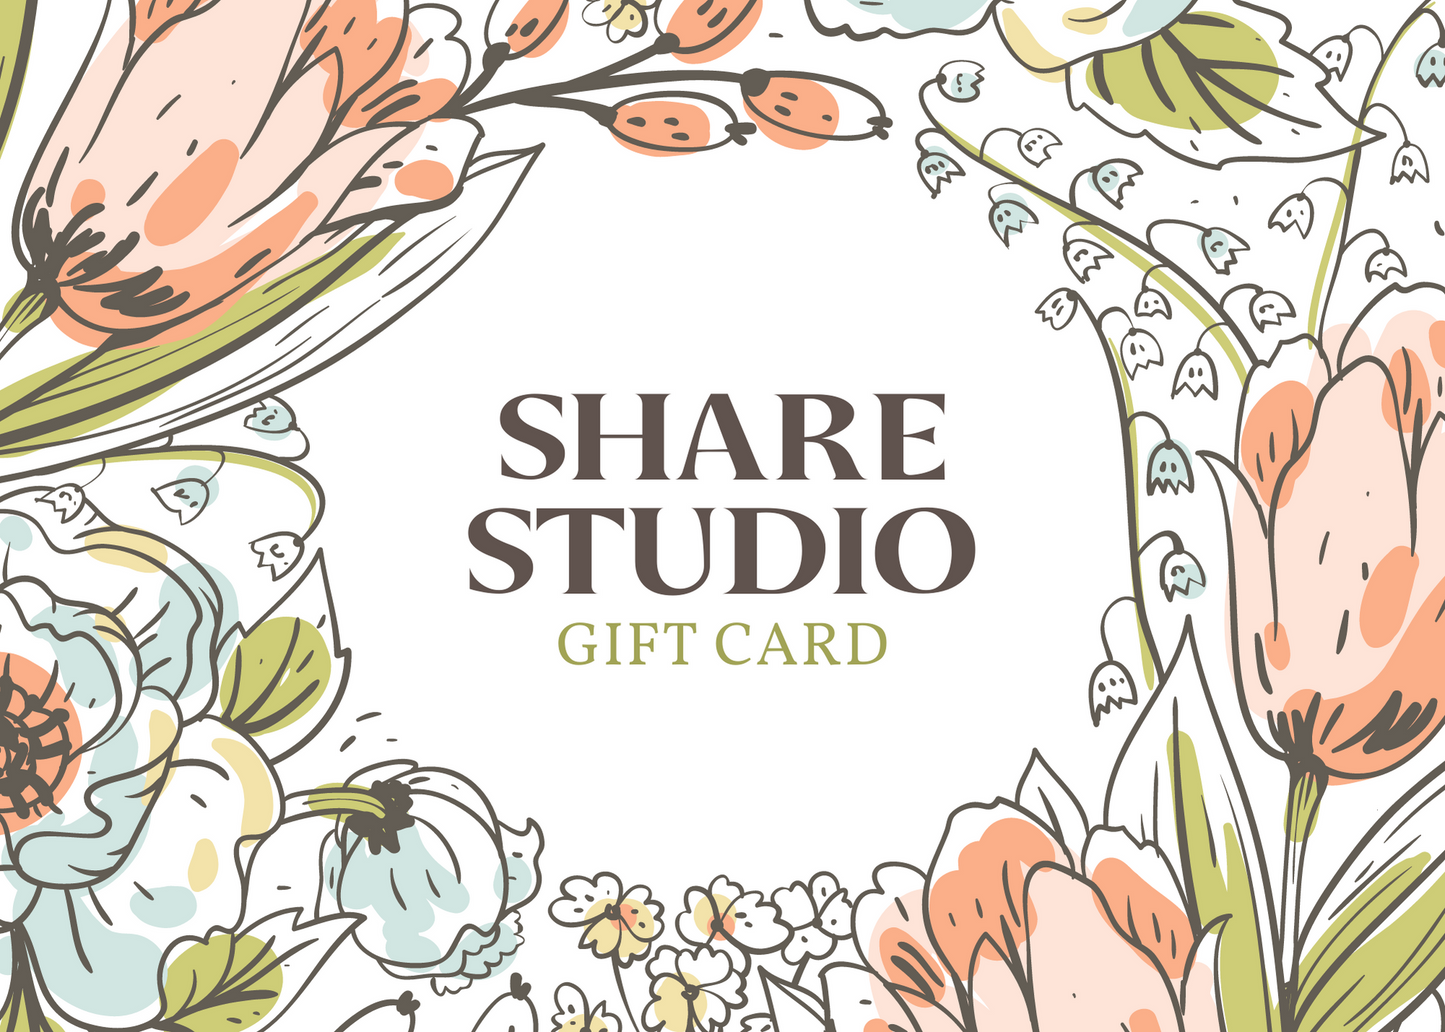 Share Studio Gift Card